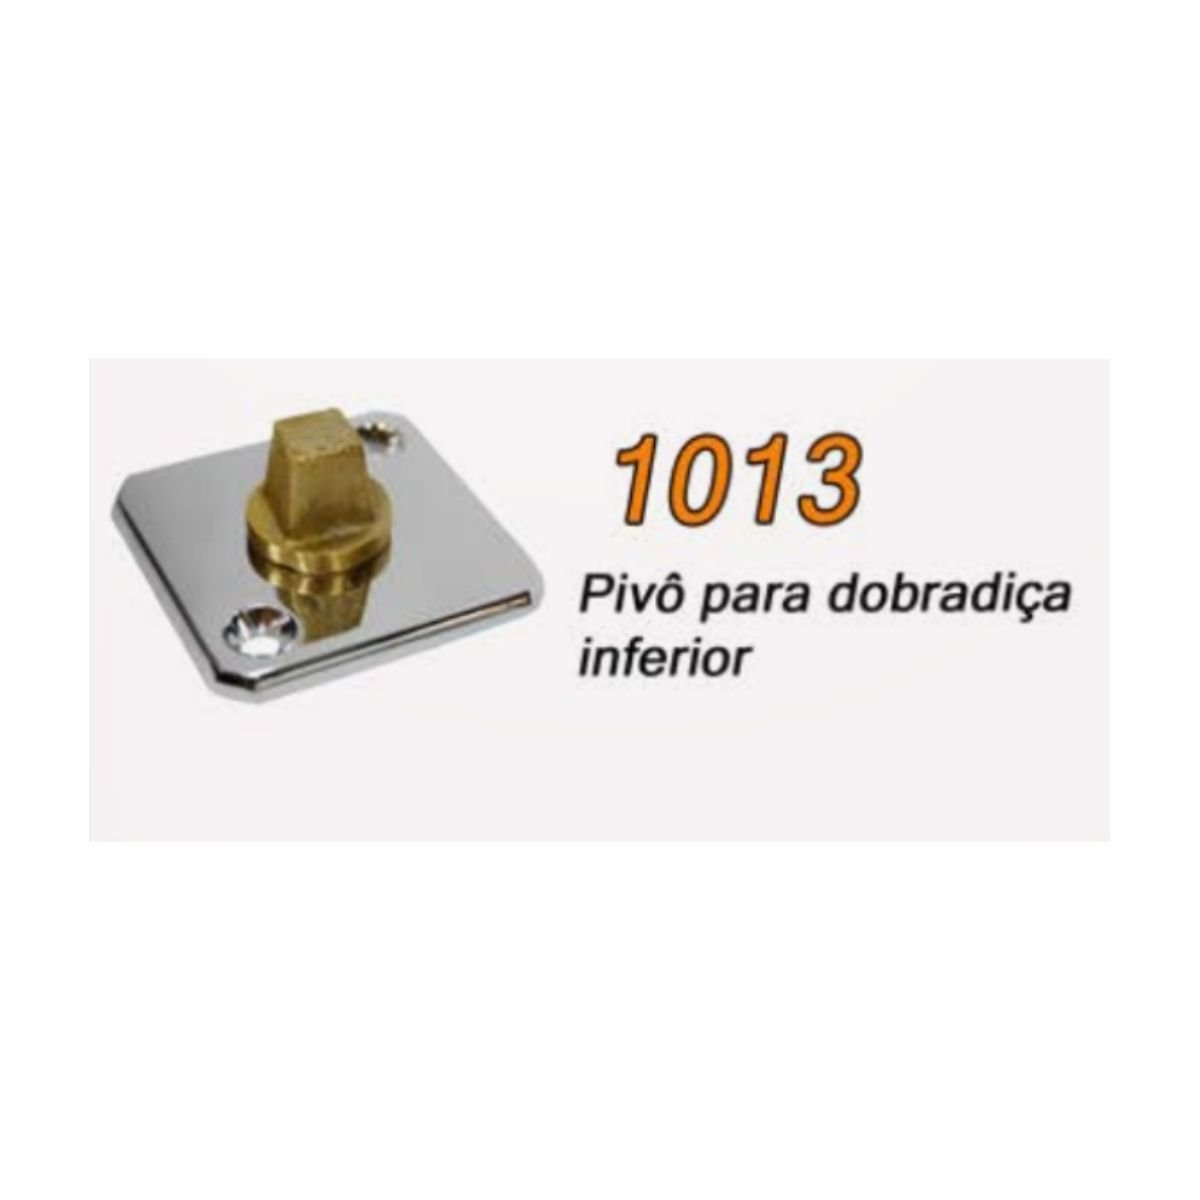 1013 - pivô para dobradiça inferior para porta pivotante - 5